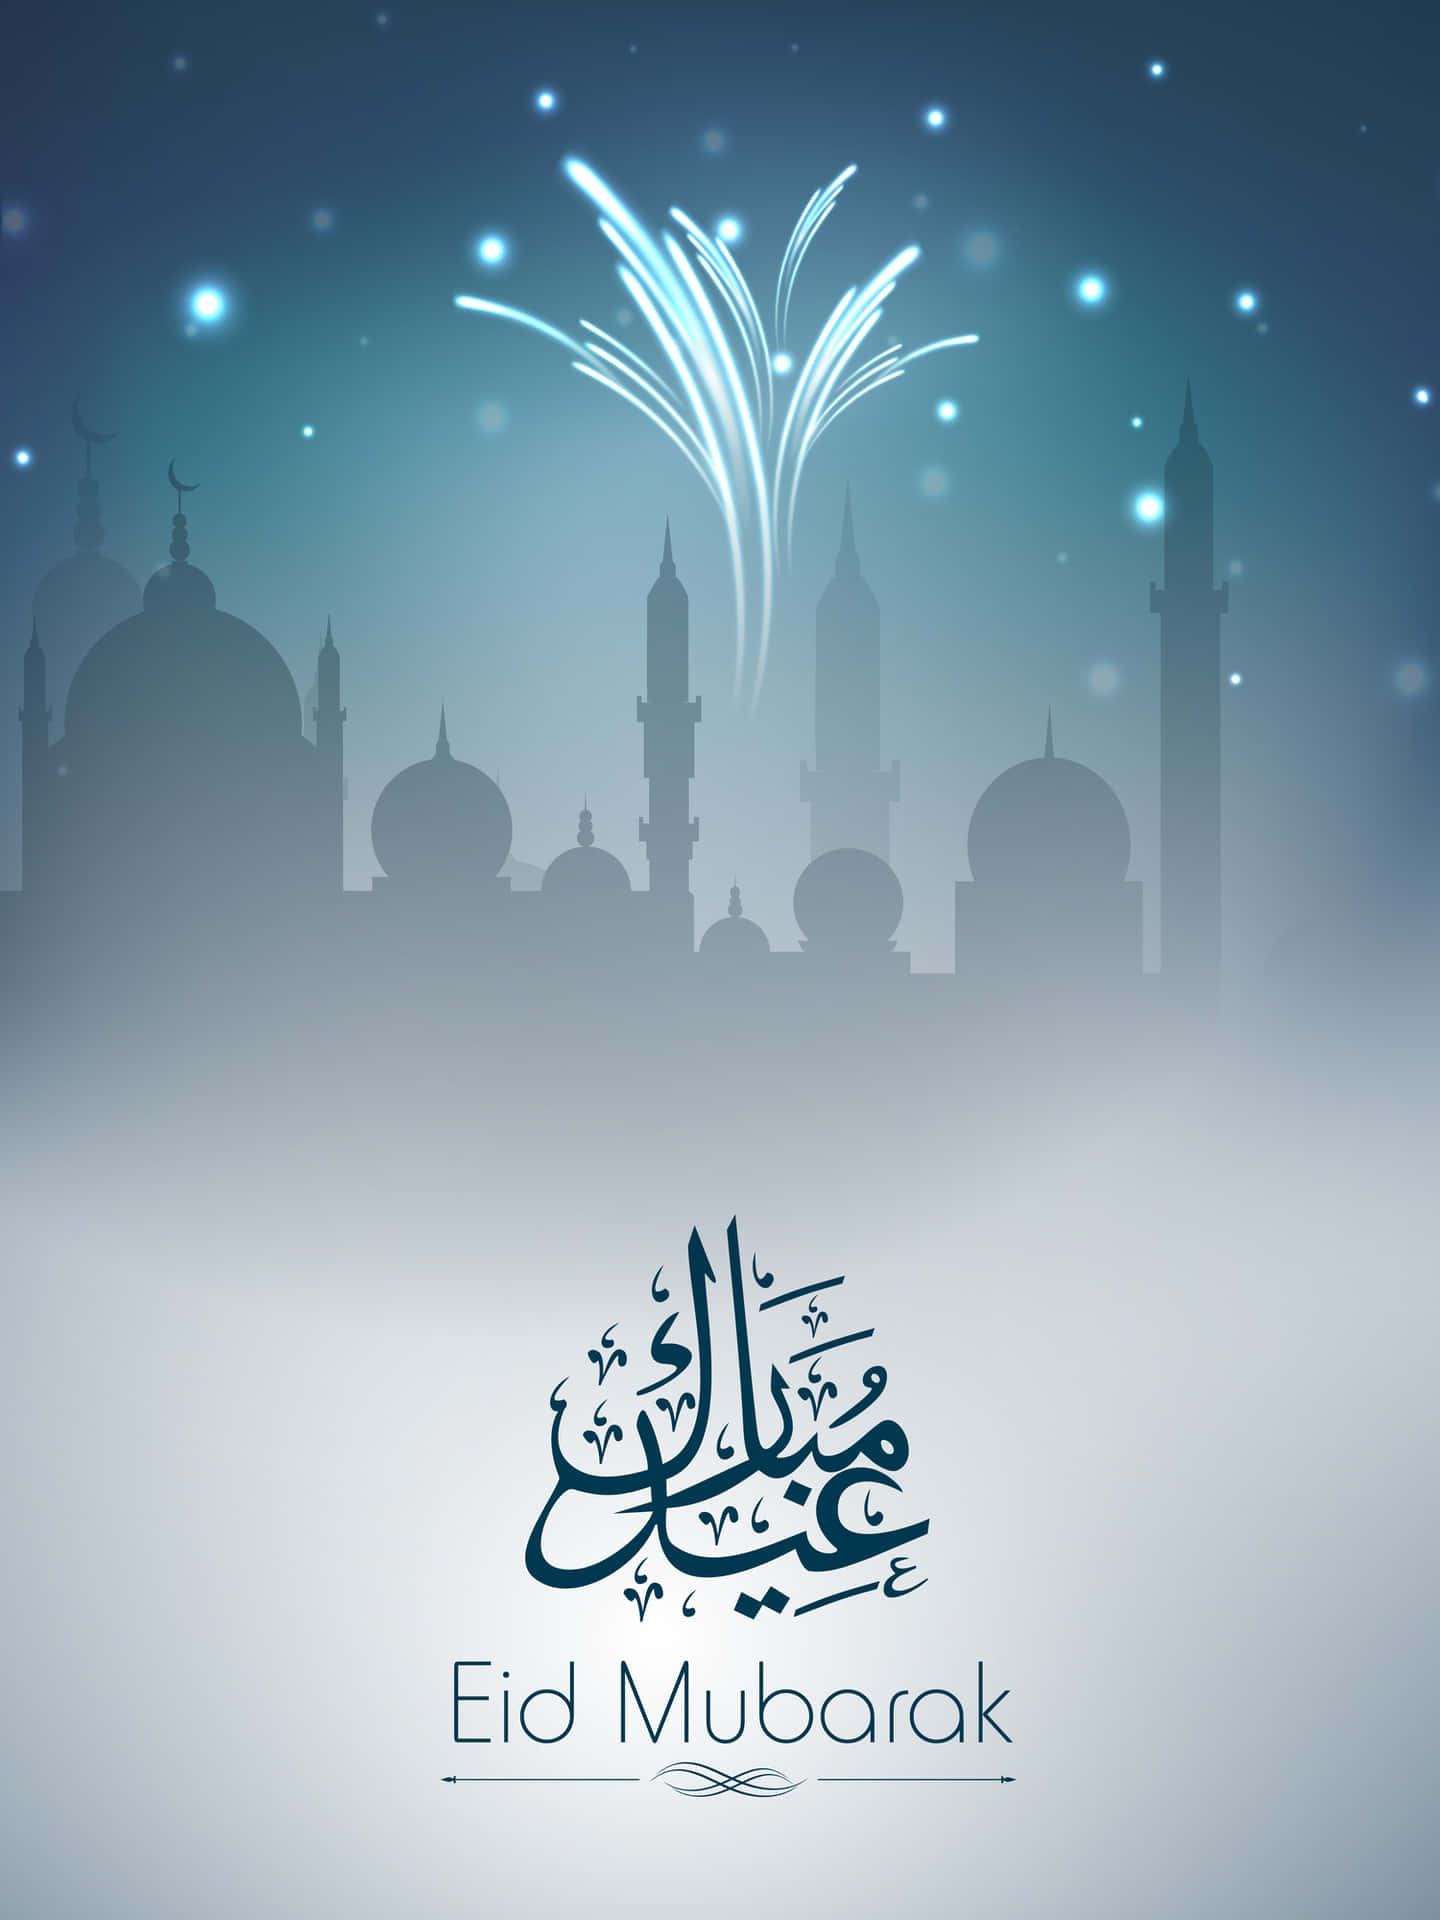 Eid Mubarak With Fireworks And Islamic Calligraphy